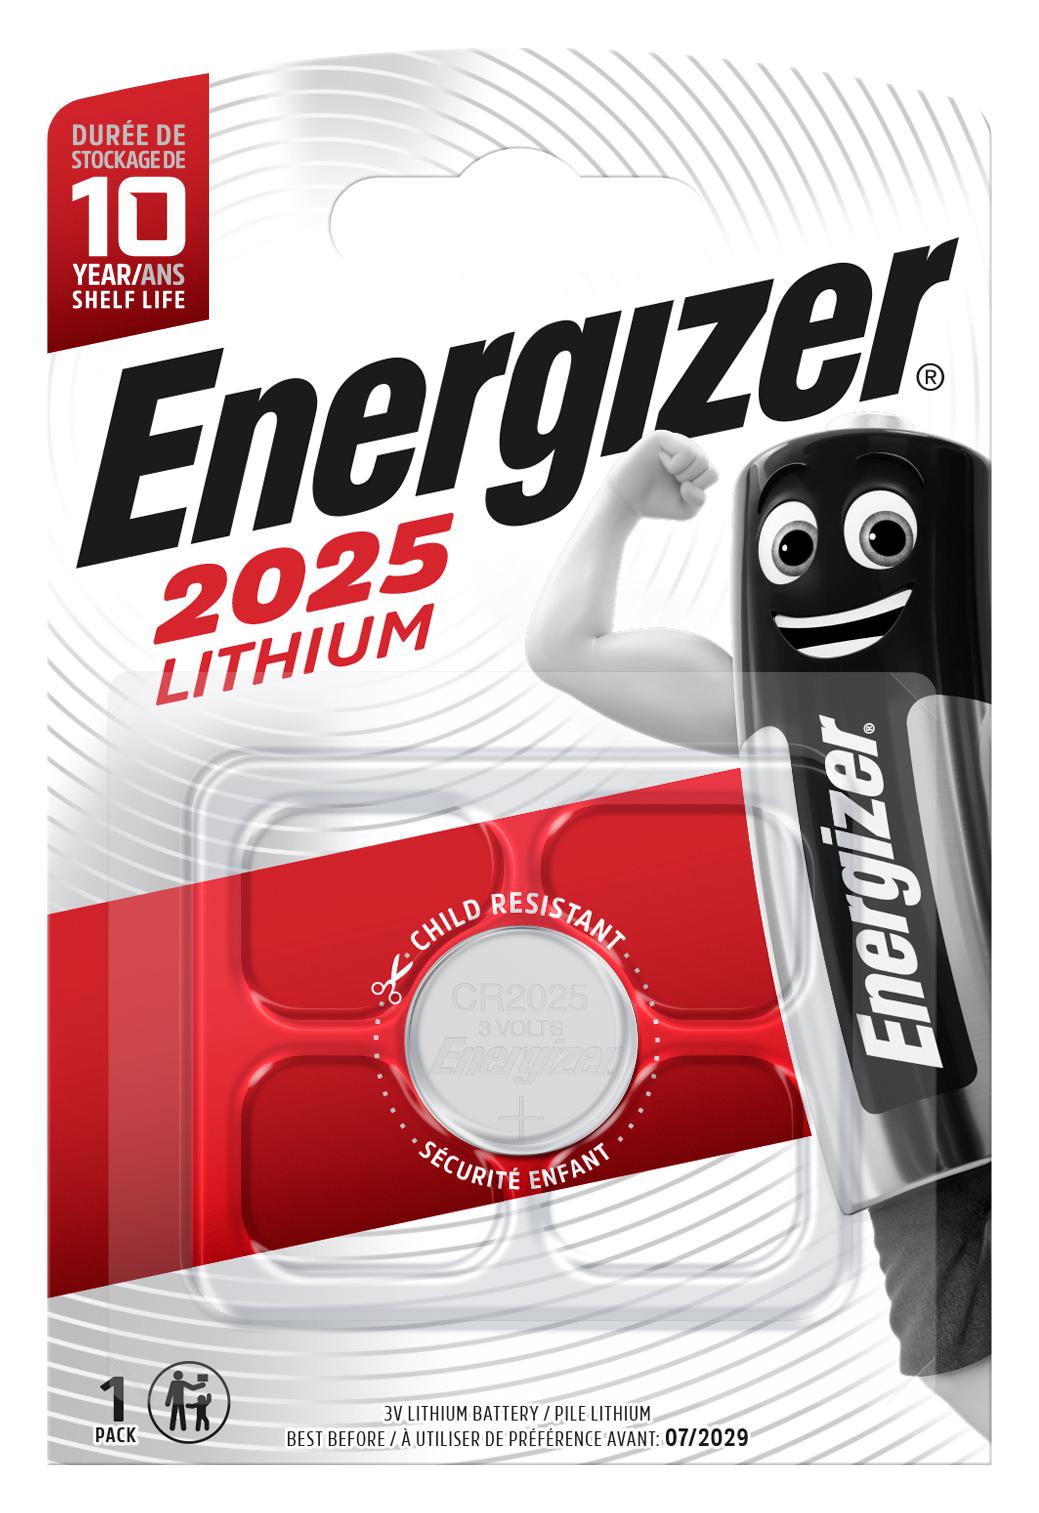 E301021602 BATTERY, LITHIUM, 3V, 0.17AH ENERGIZER